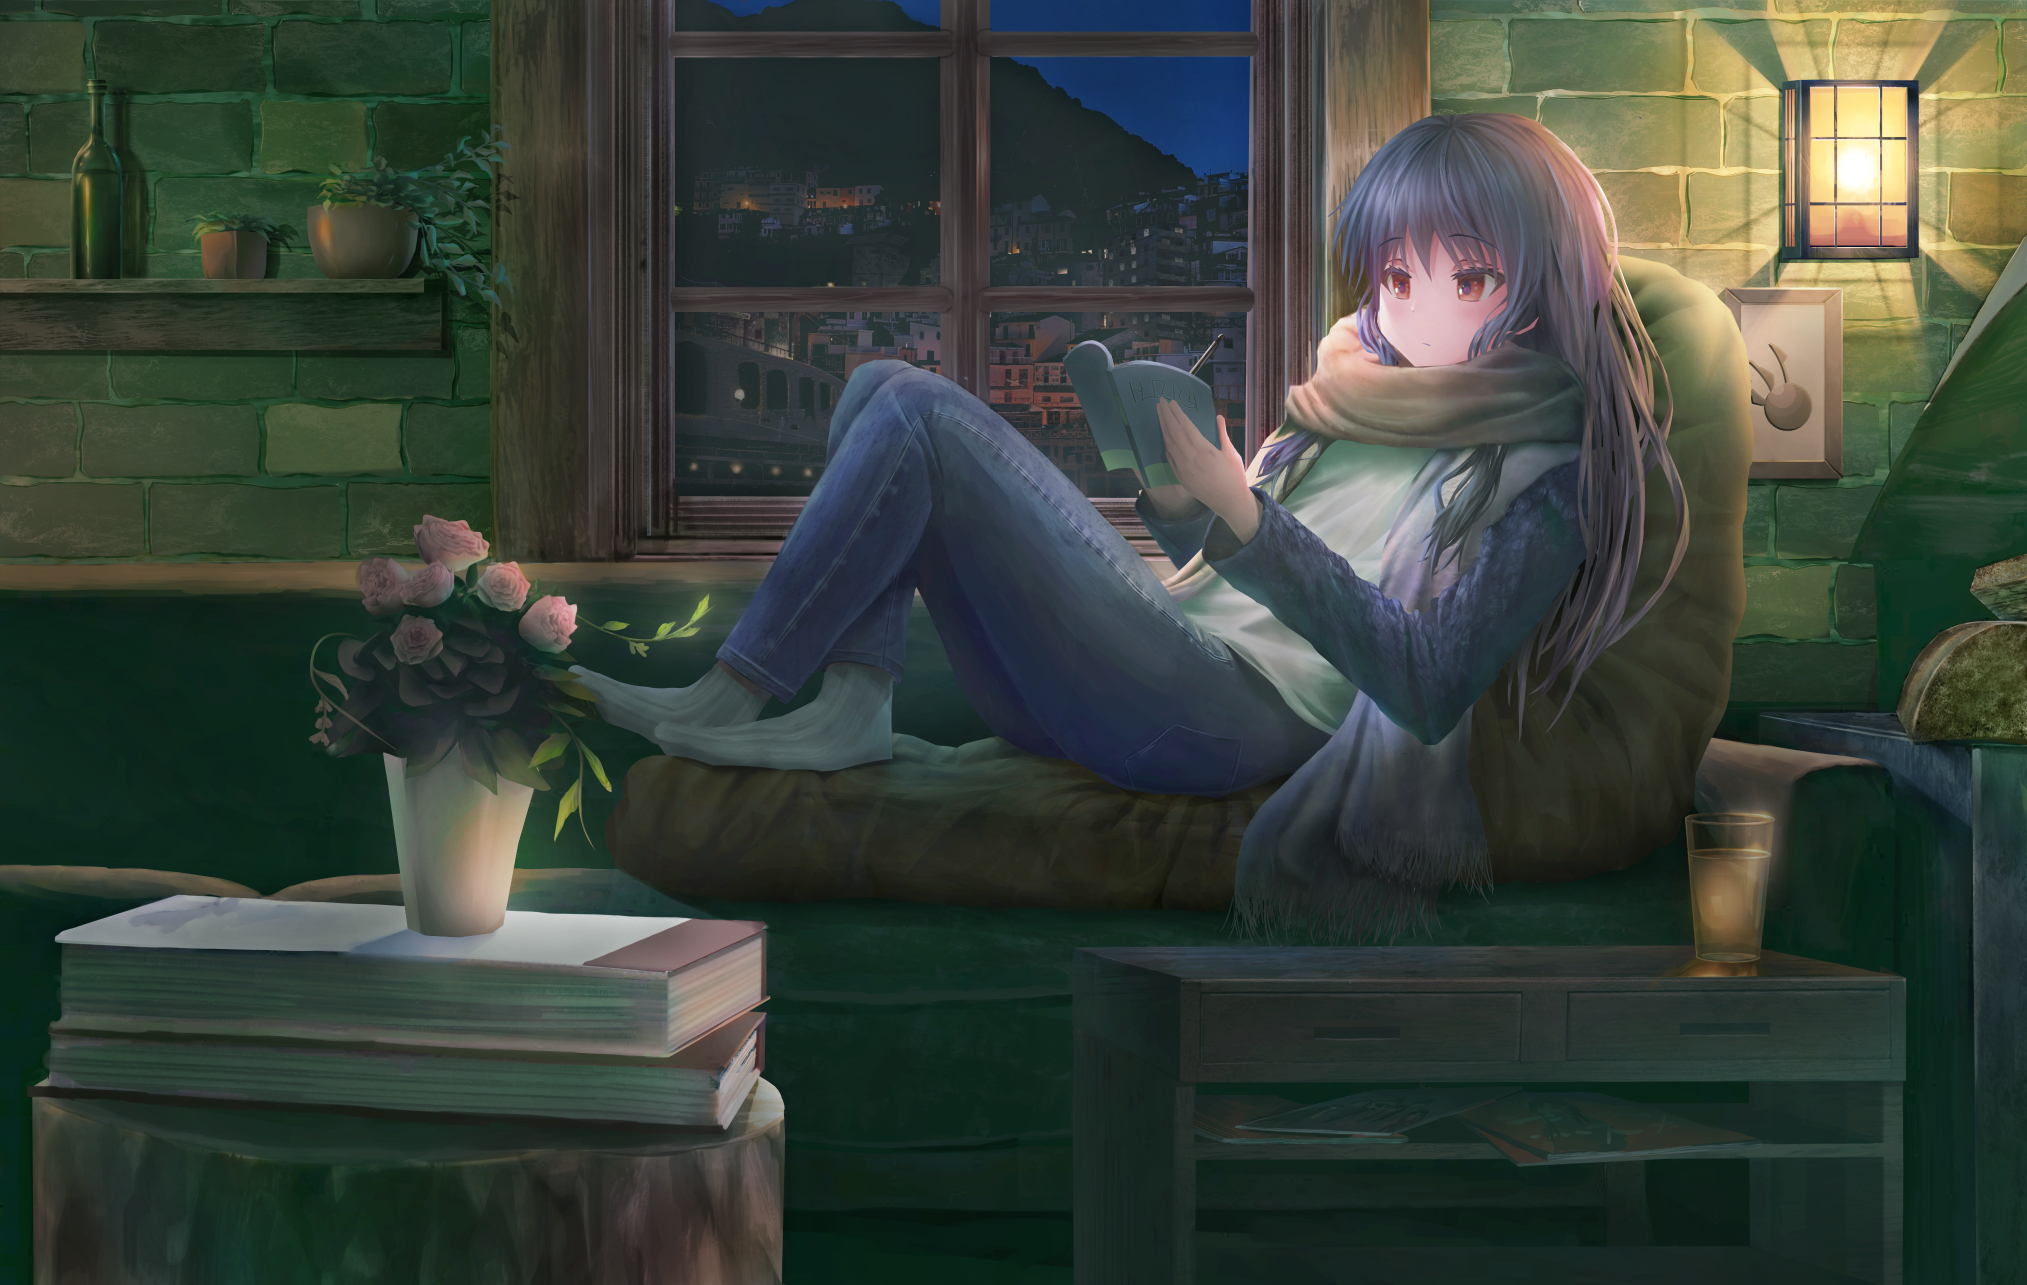 Anime Girl HD Wallpaper by タミっ子